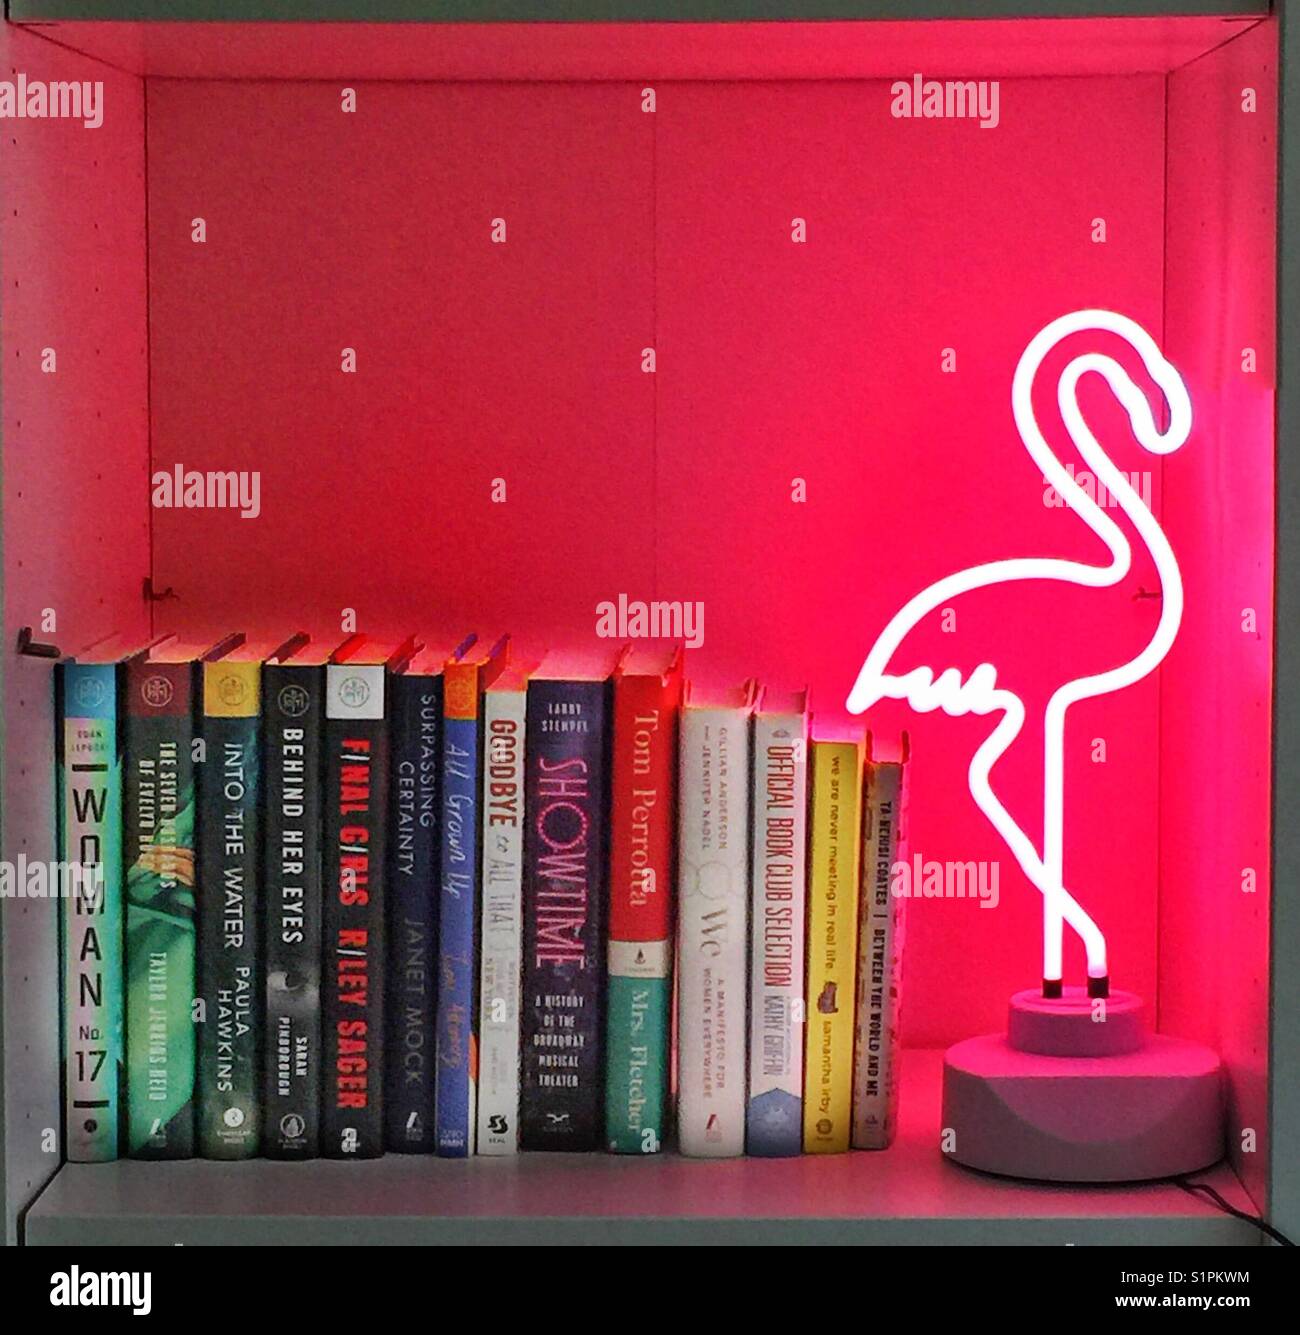 A pink neon flamingo light on a bookshelf with books Stock Photo